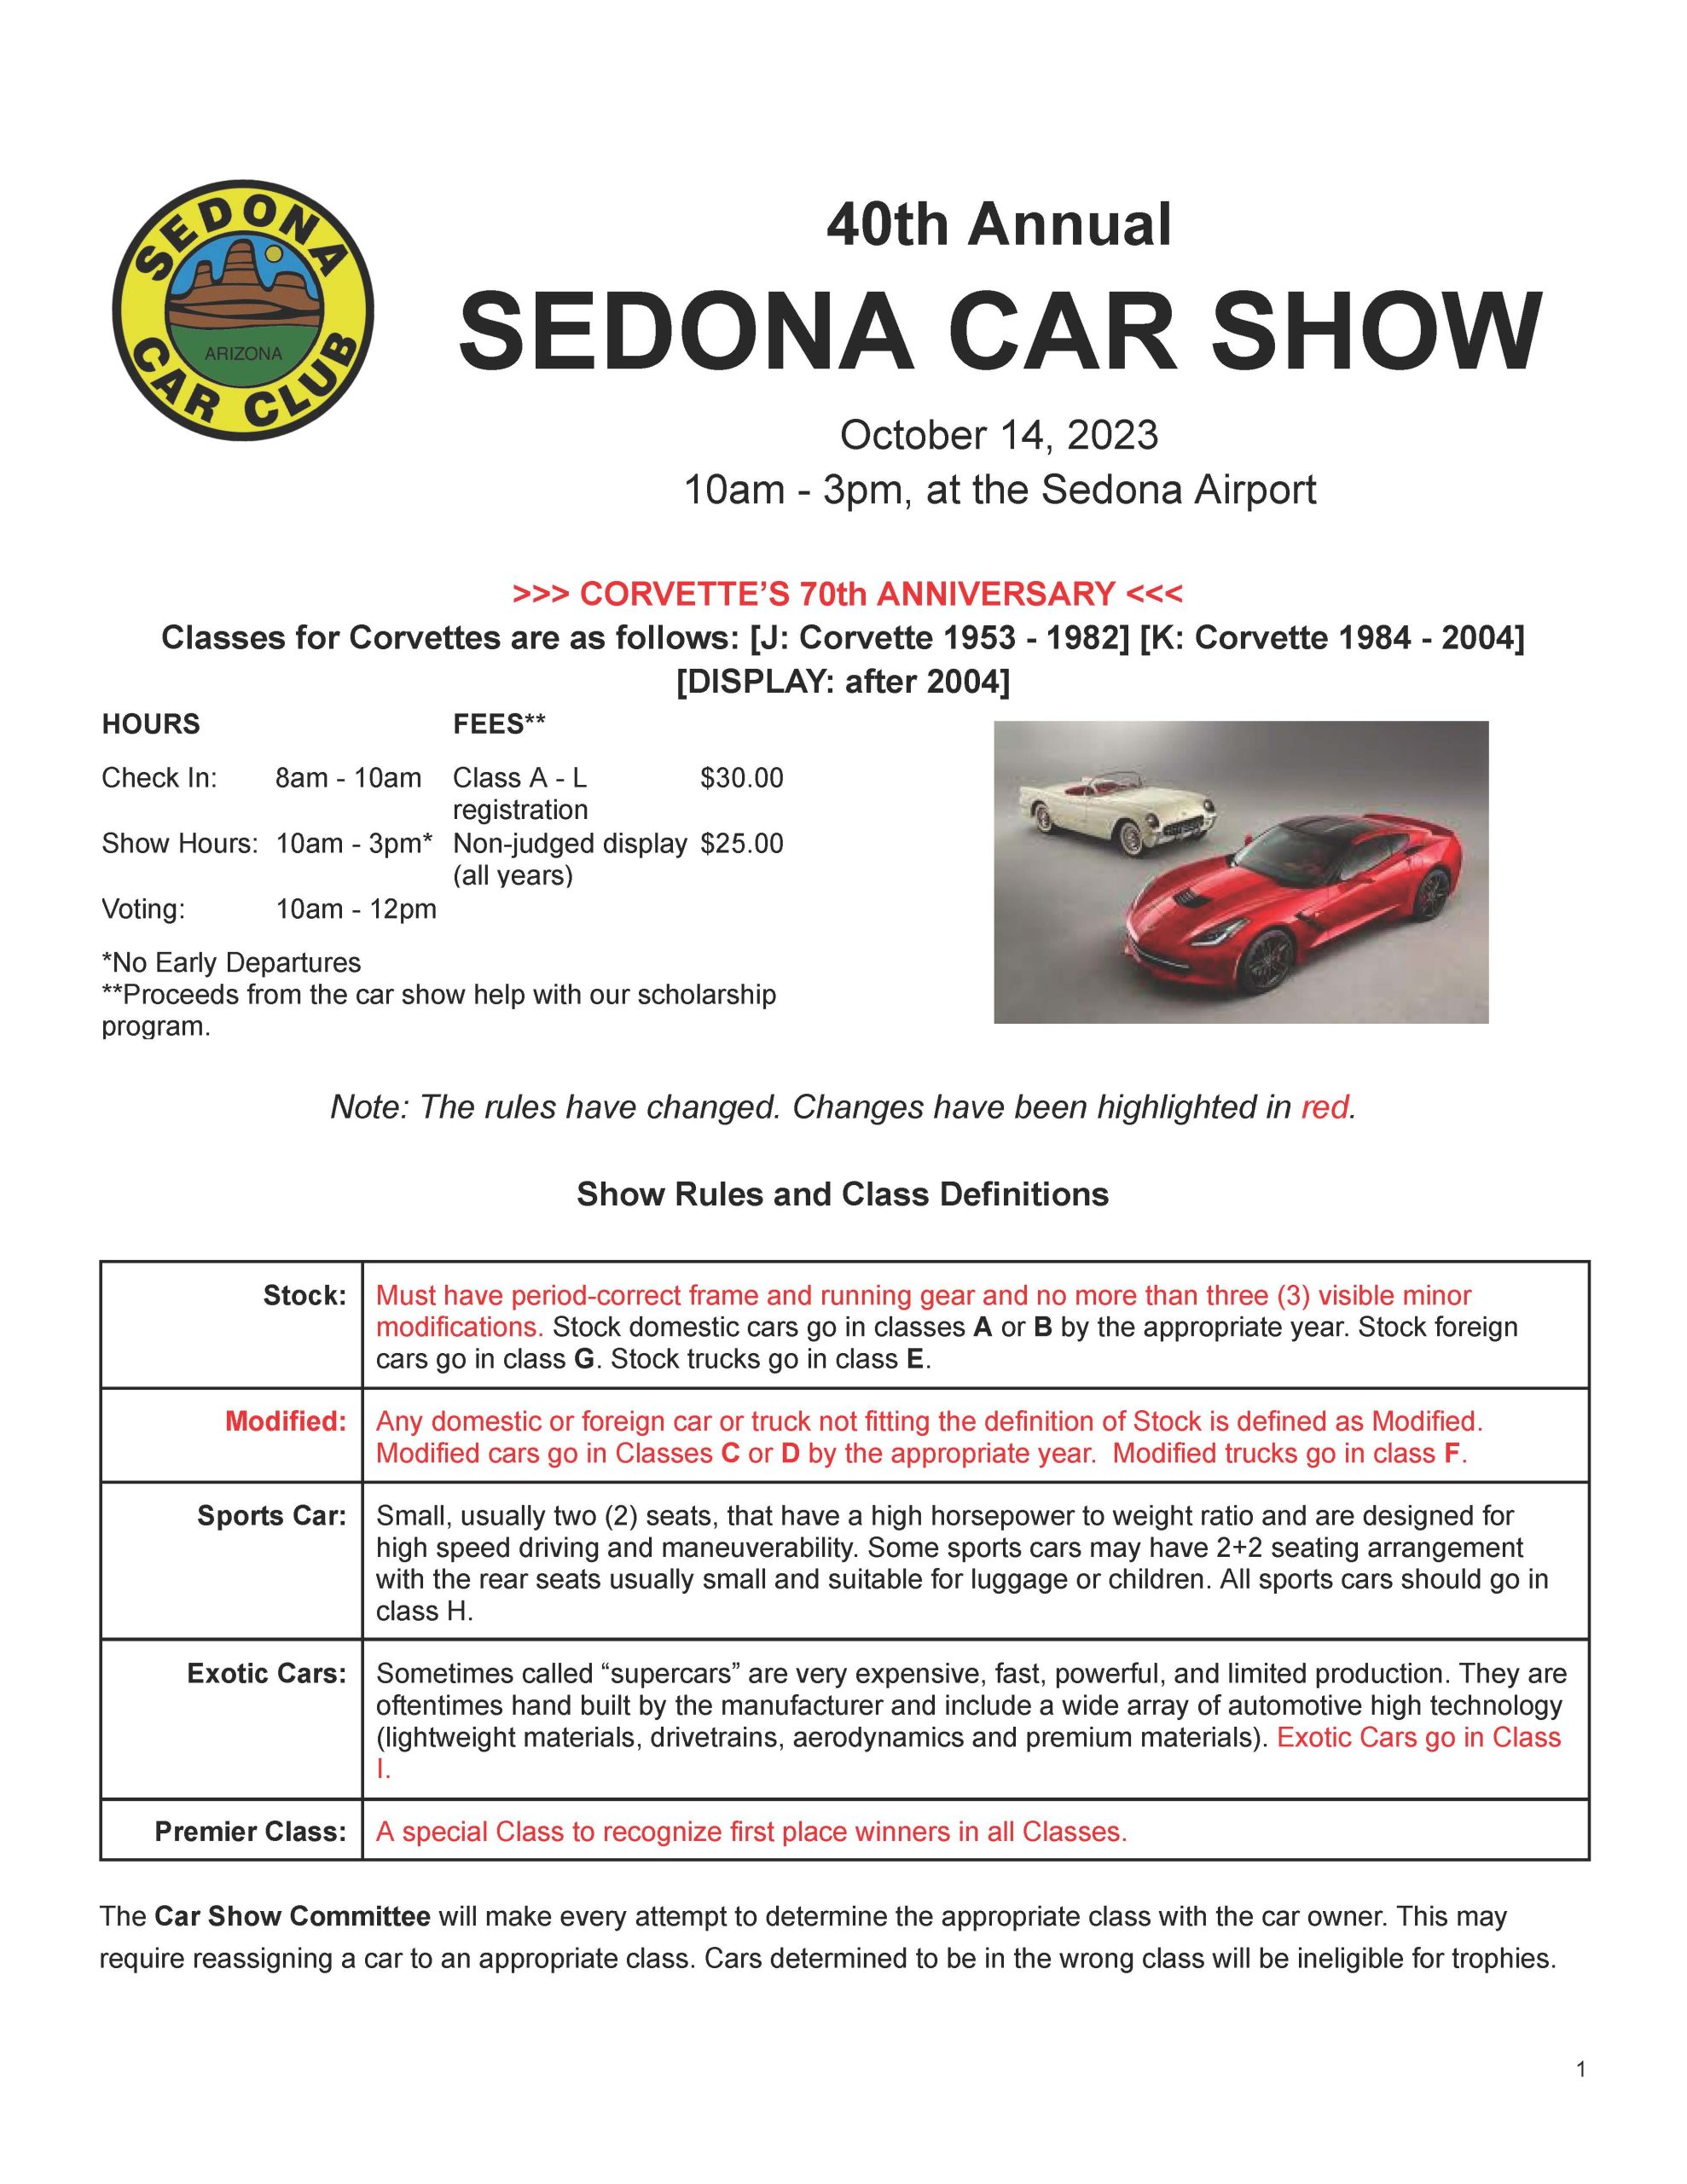 Sedona Car Show Arizona Car Culture